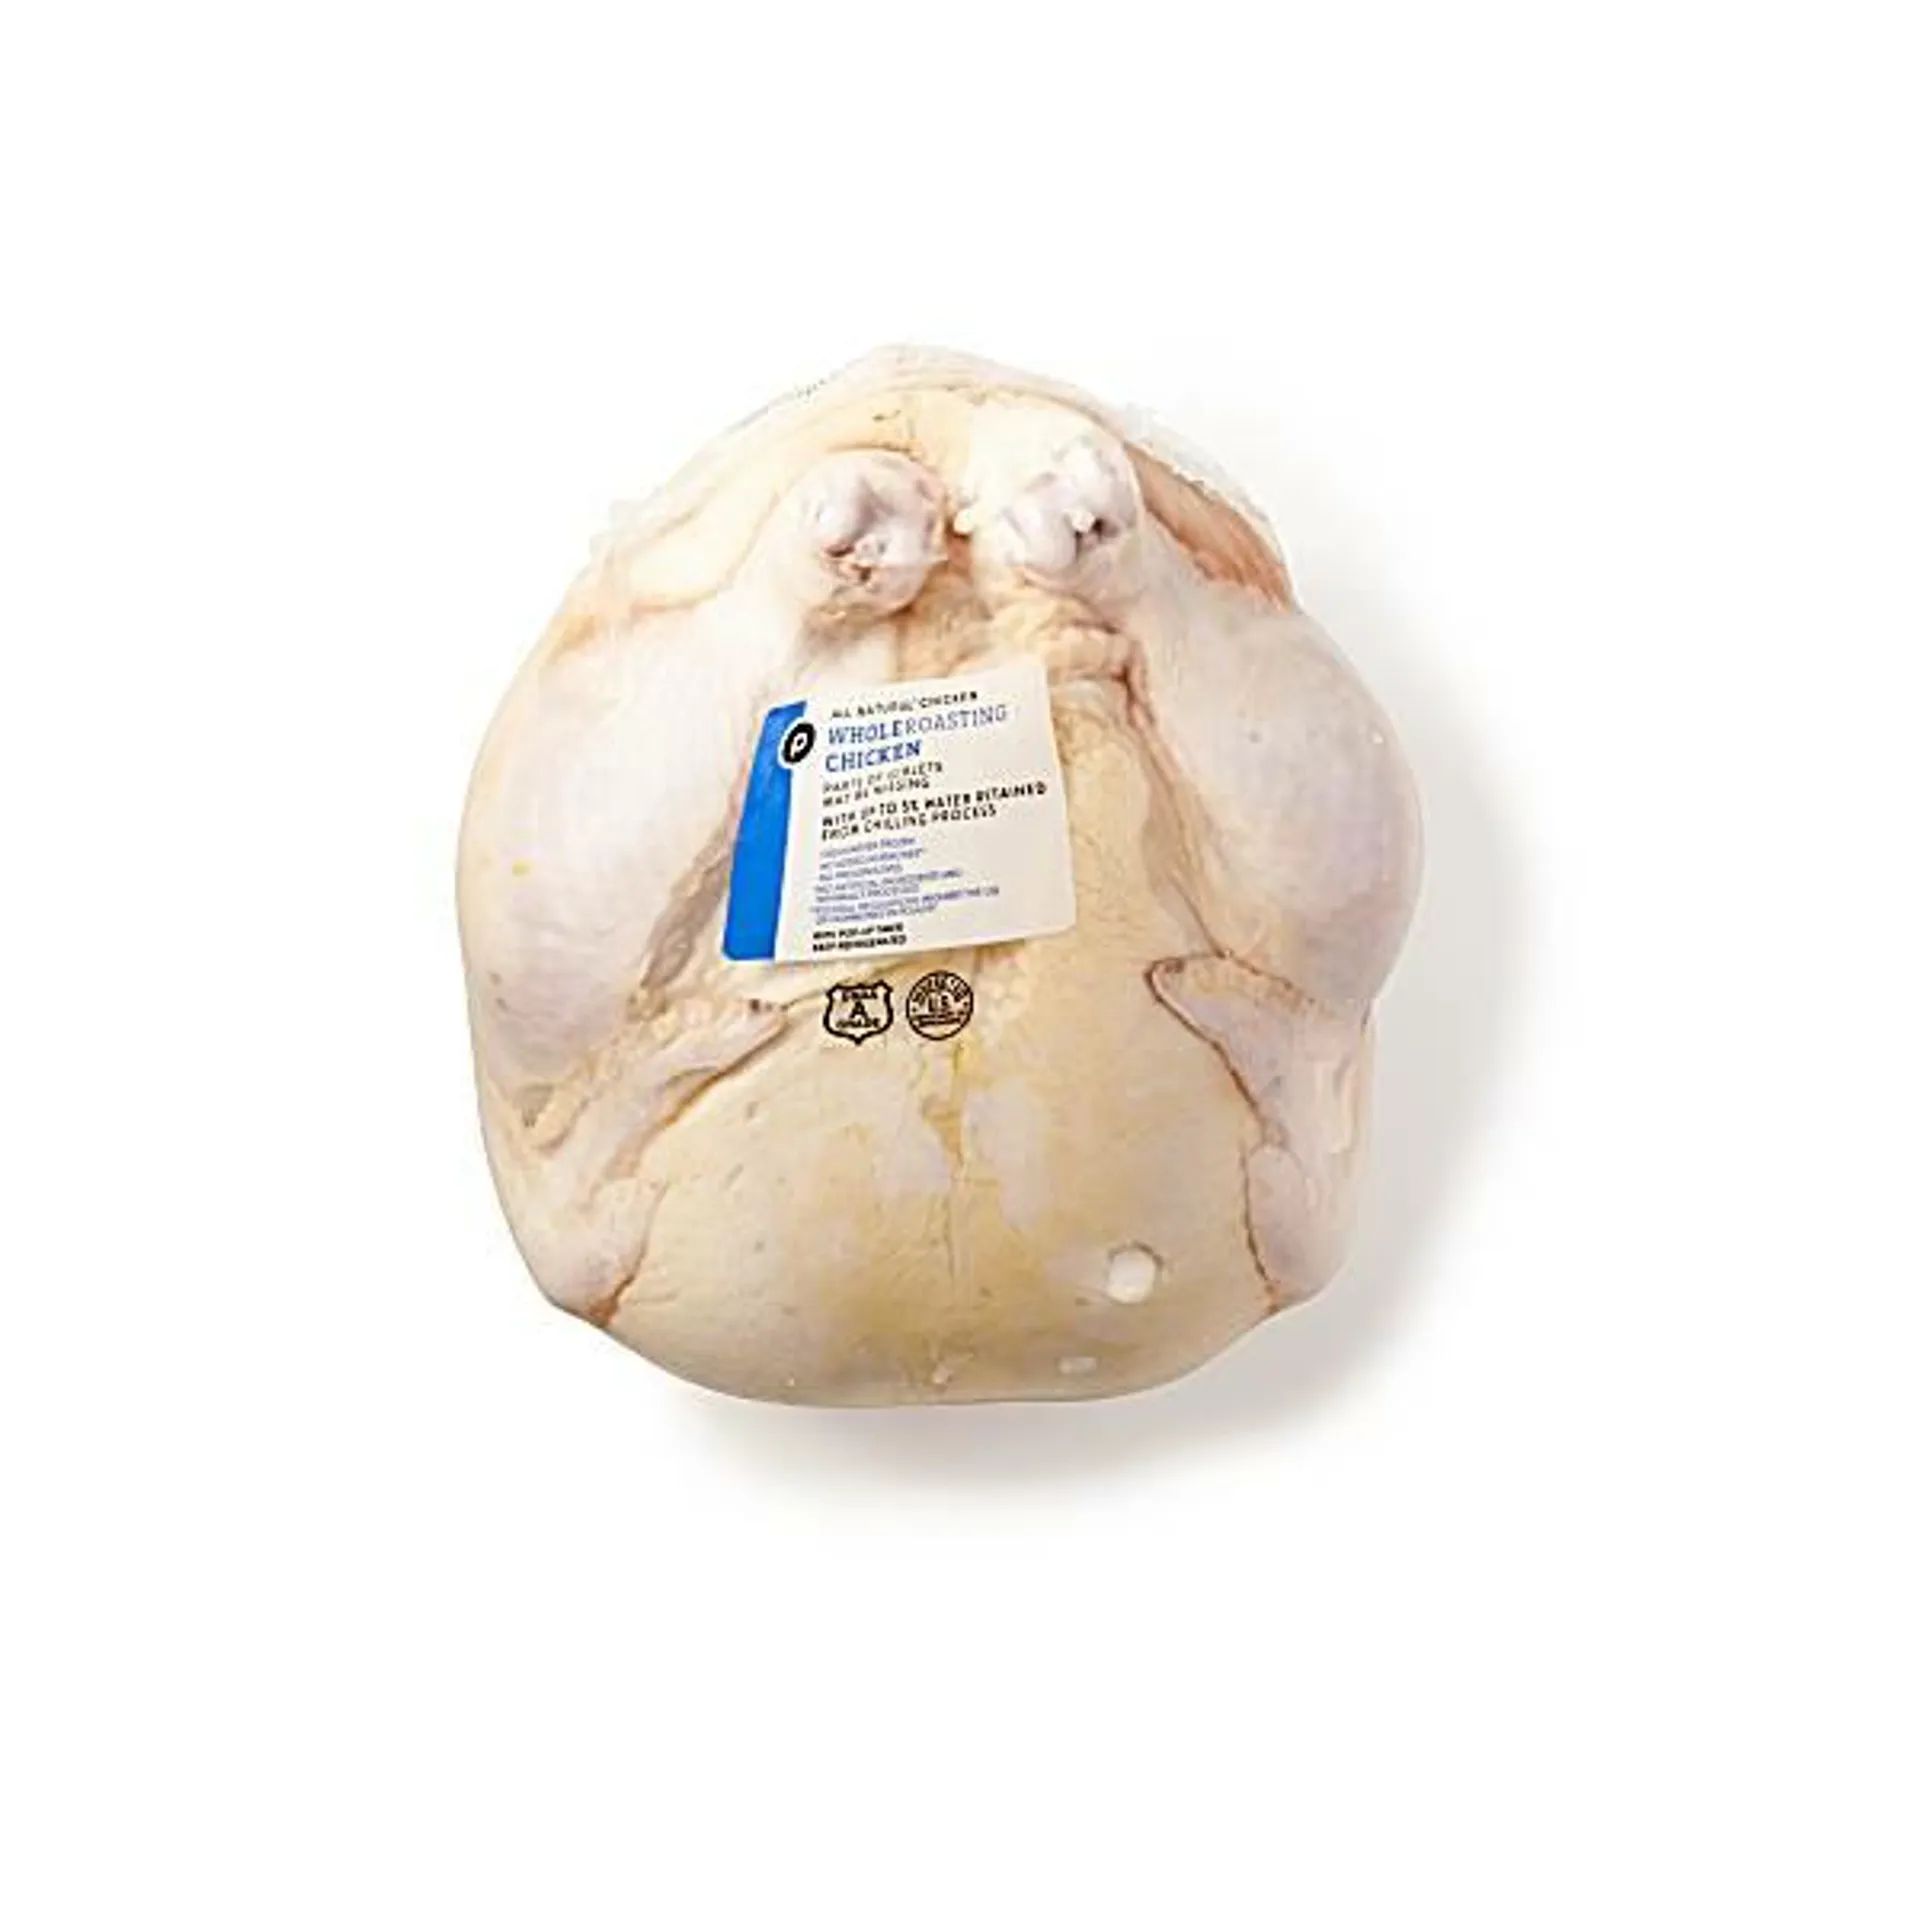 Publix Chicken for Roasting, USDA Grade A, Vegetable Fed